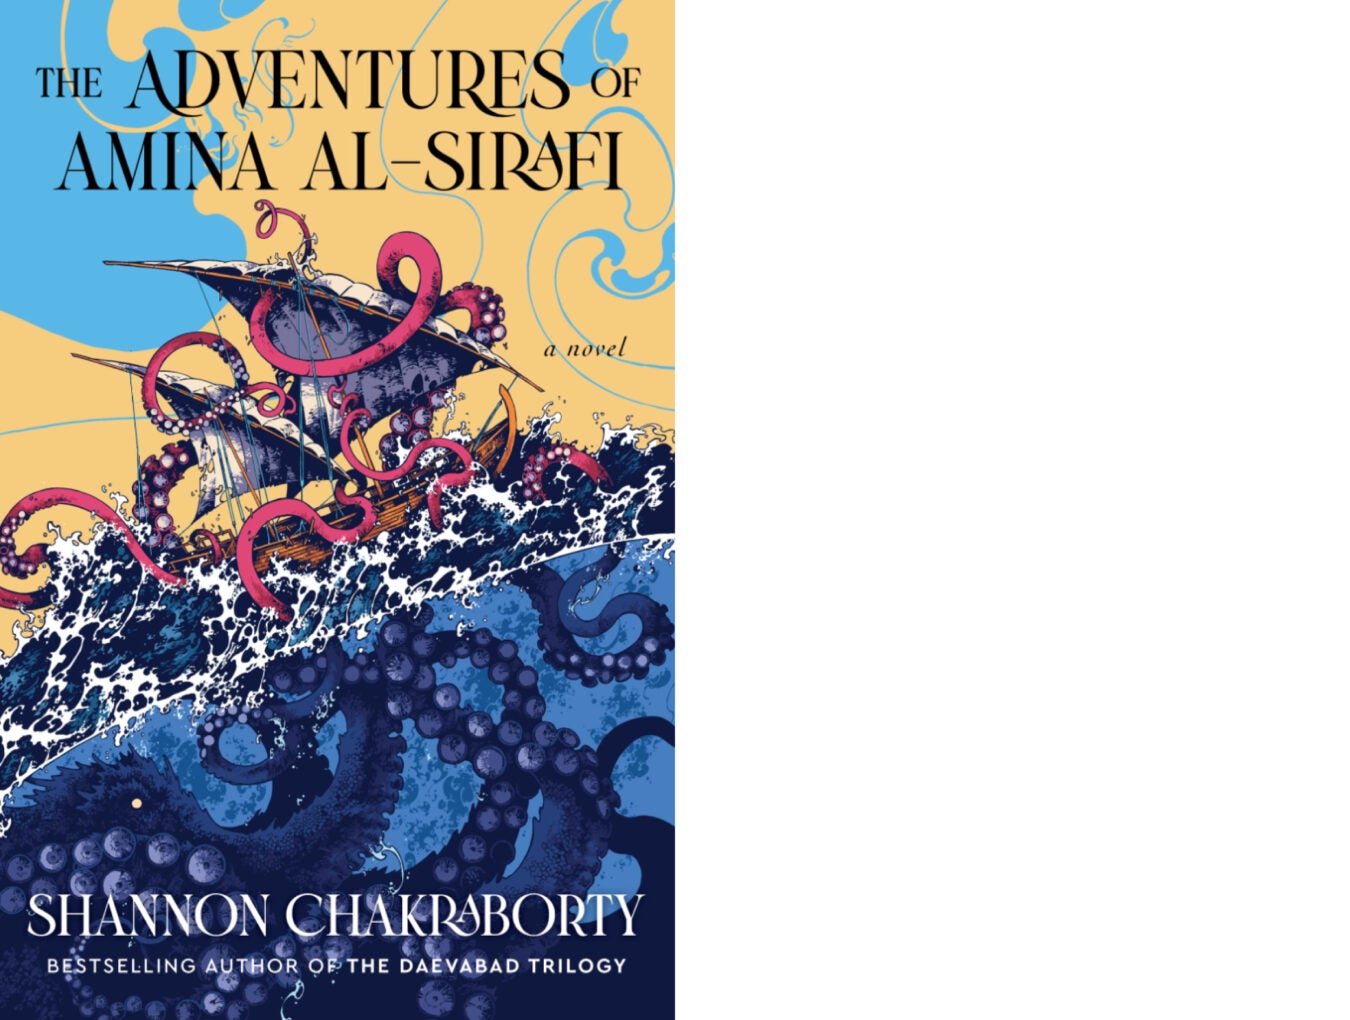 Book cover: "The Adventures of Amina Al-Sirafi."